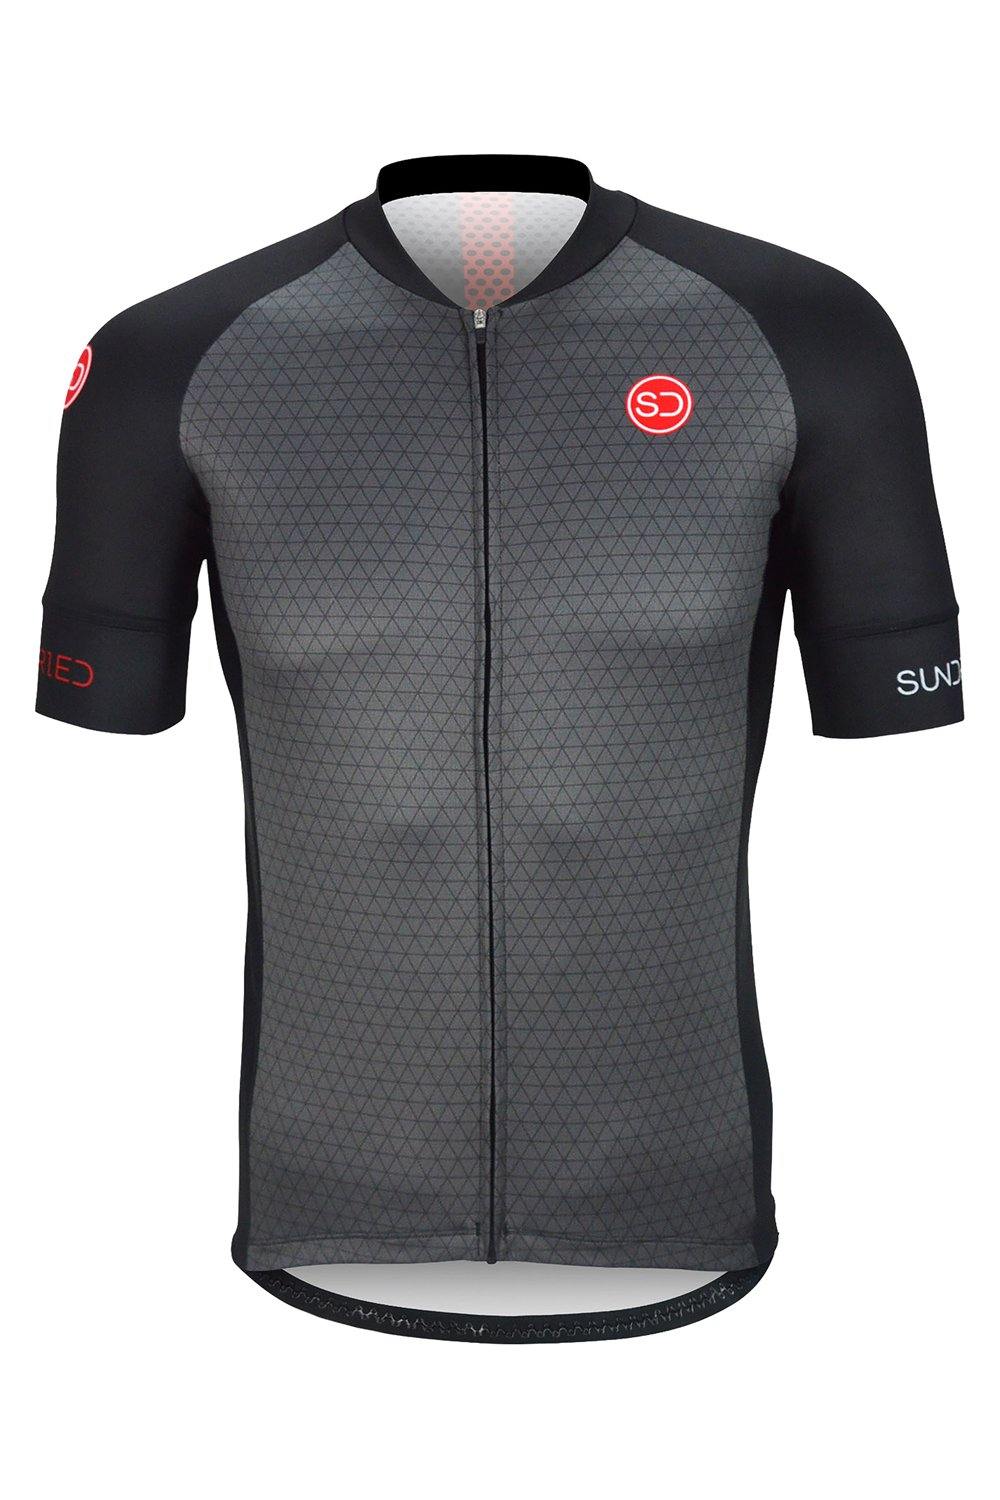 Sundried Century Men's Short Sleeve Cycle Jersey Short Sleeve Jersey XL Black SD0169 XL Black Activewear